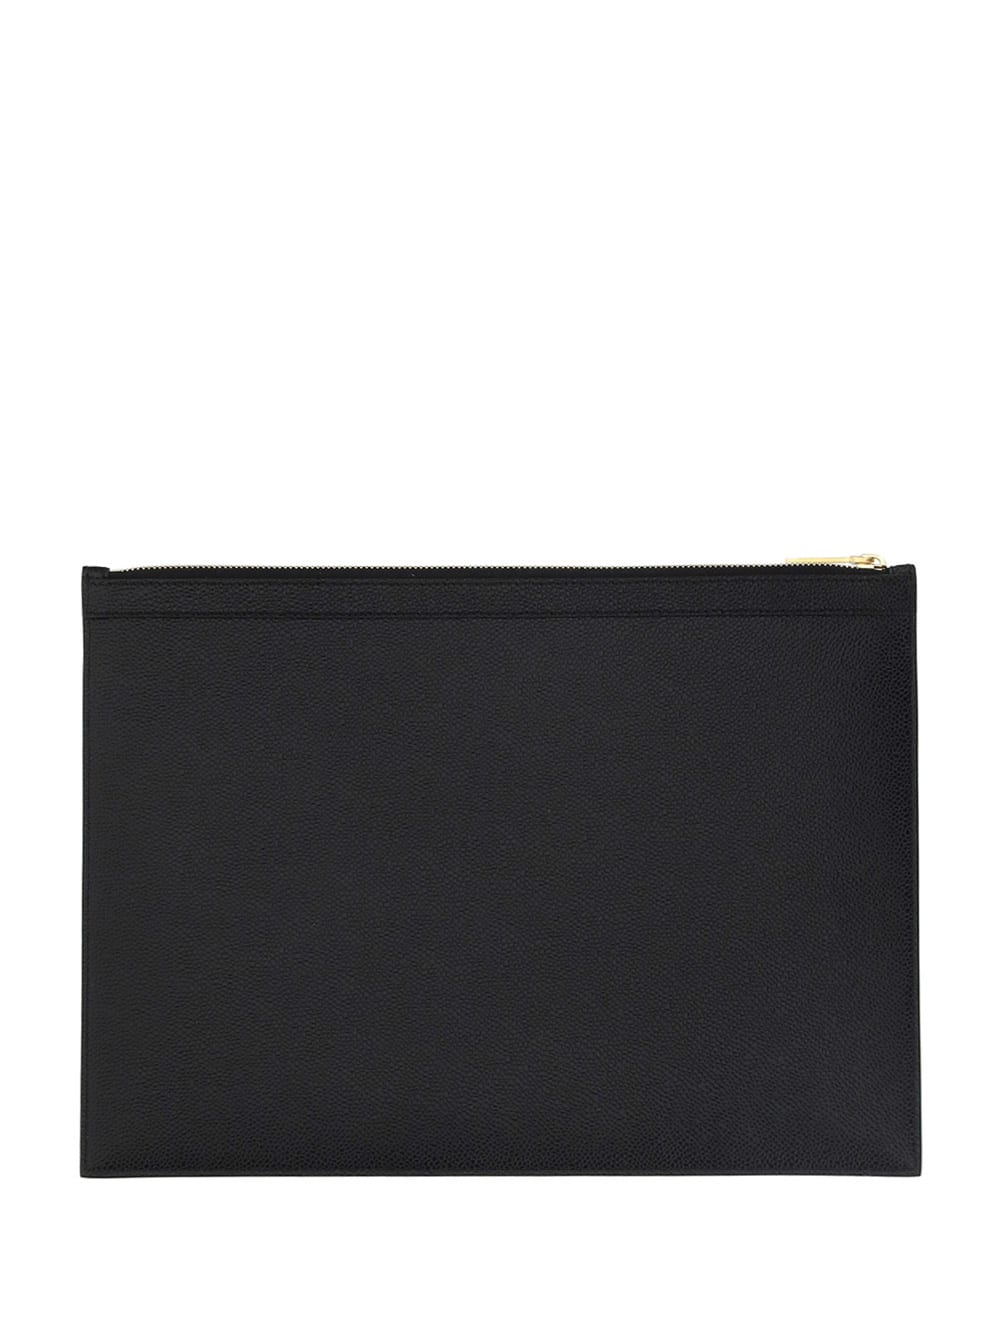 Shop Thom Browne Document Holder In Black